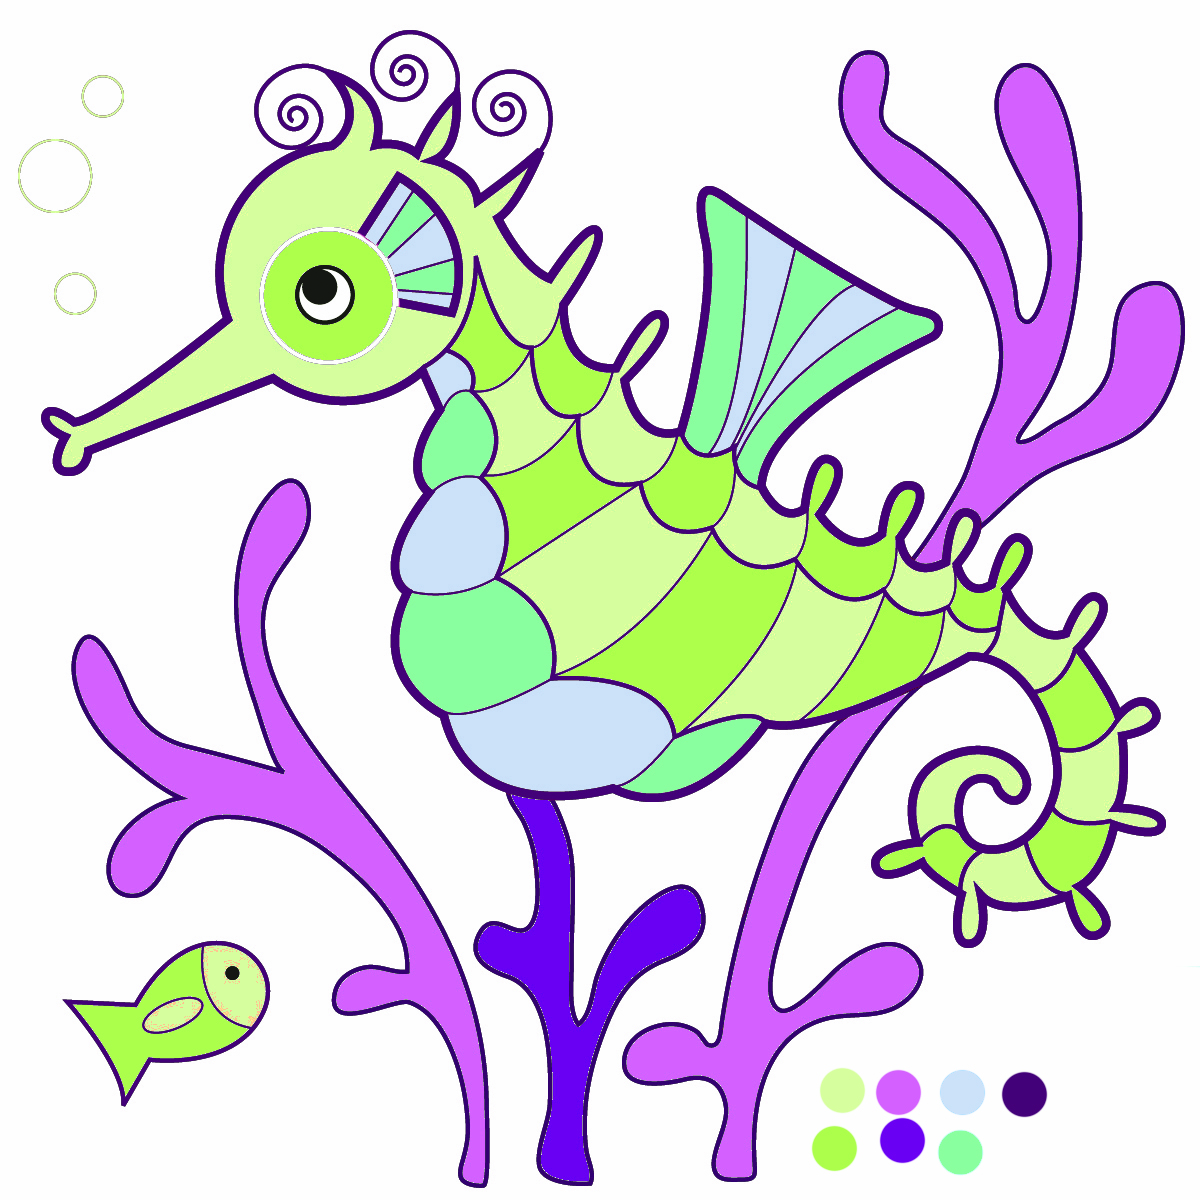 Seahorse clip art images free clipart